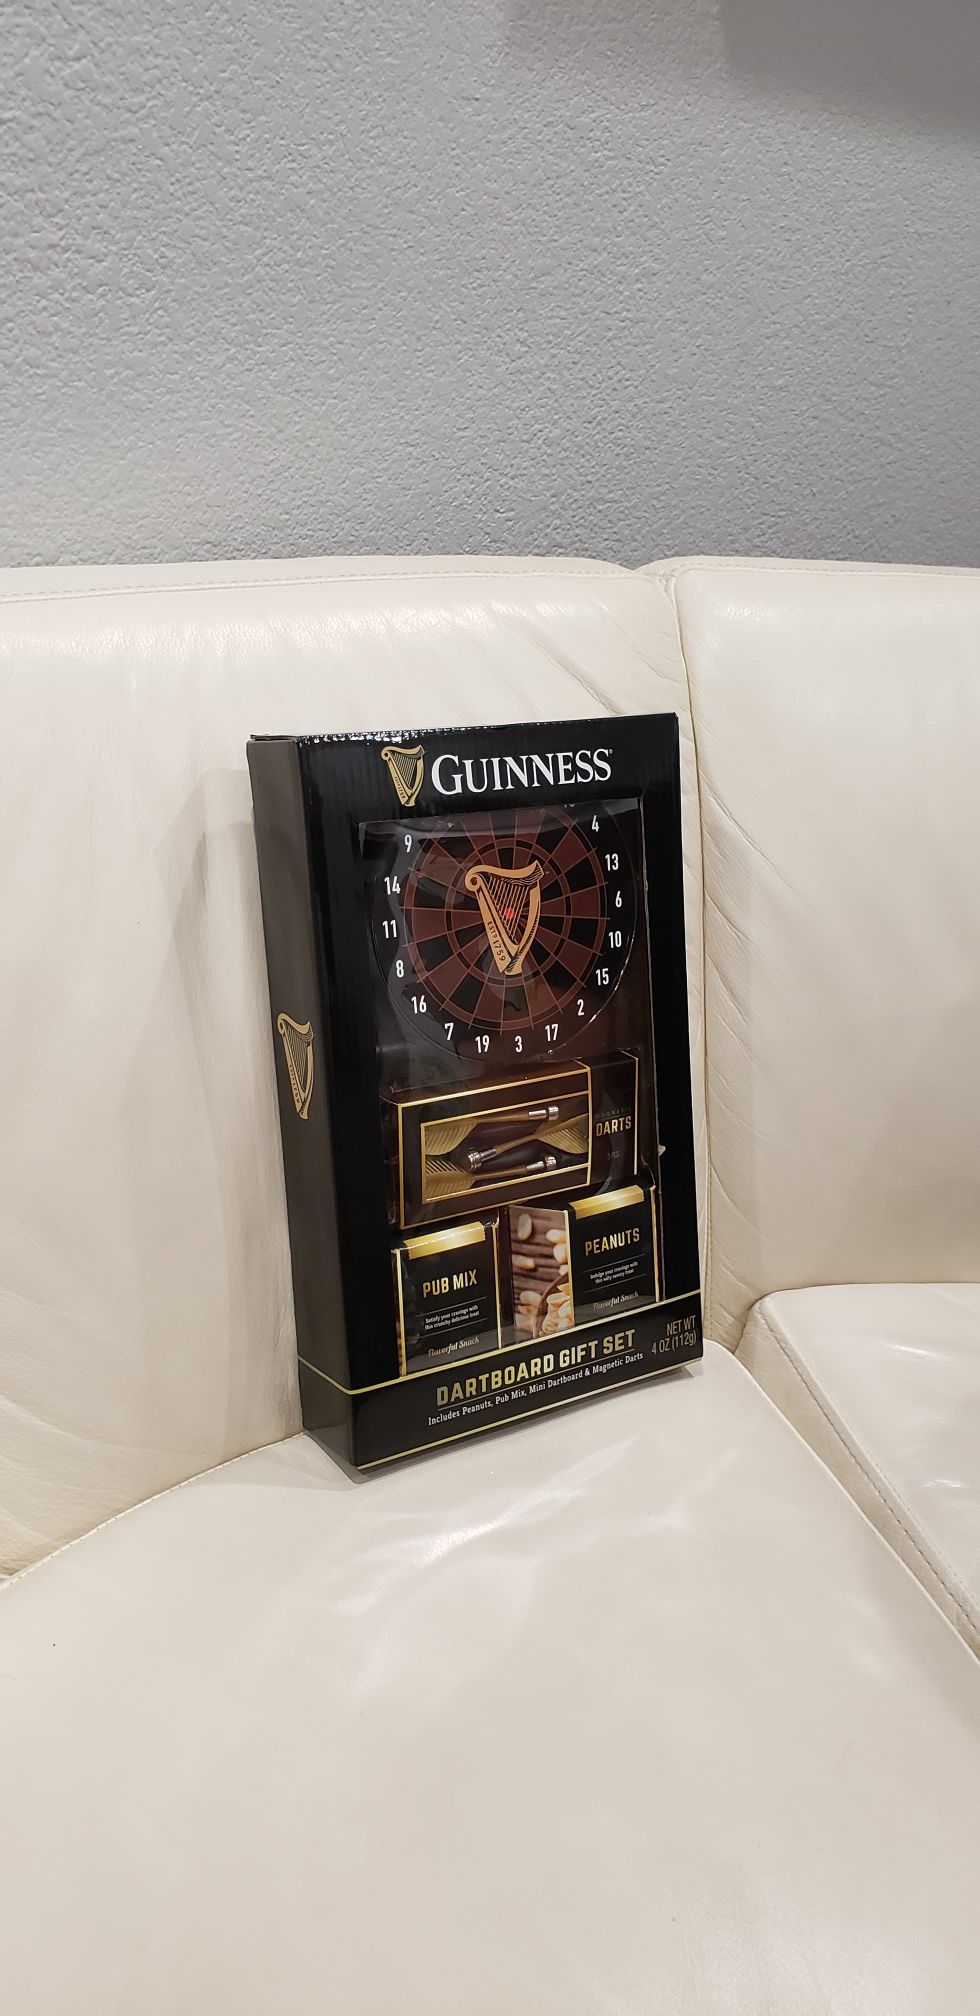 Guiness Irish beer dart board game gift set with dart board, magnetic darts, pub mix, peanuts